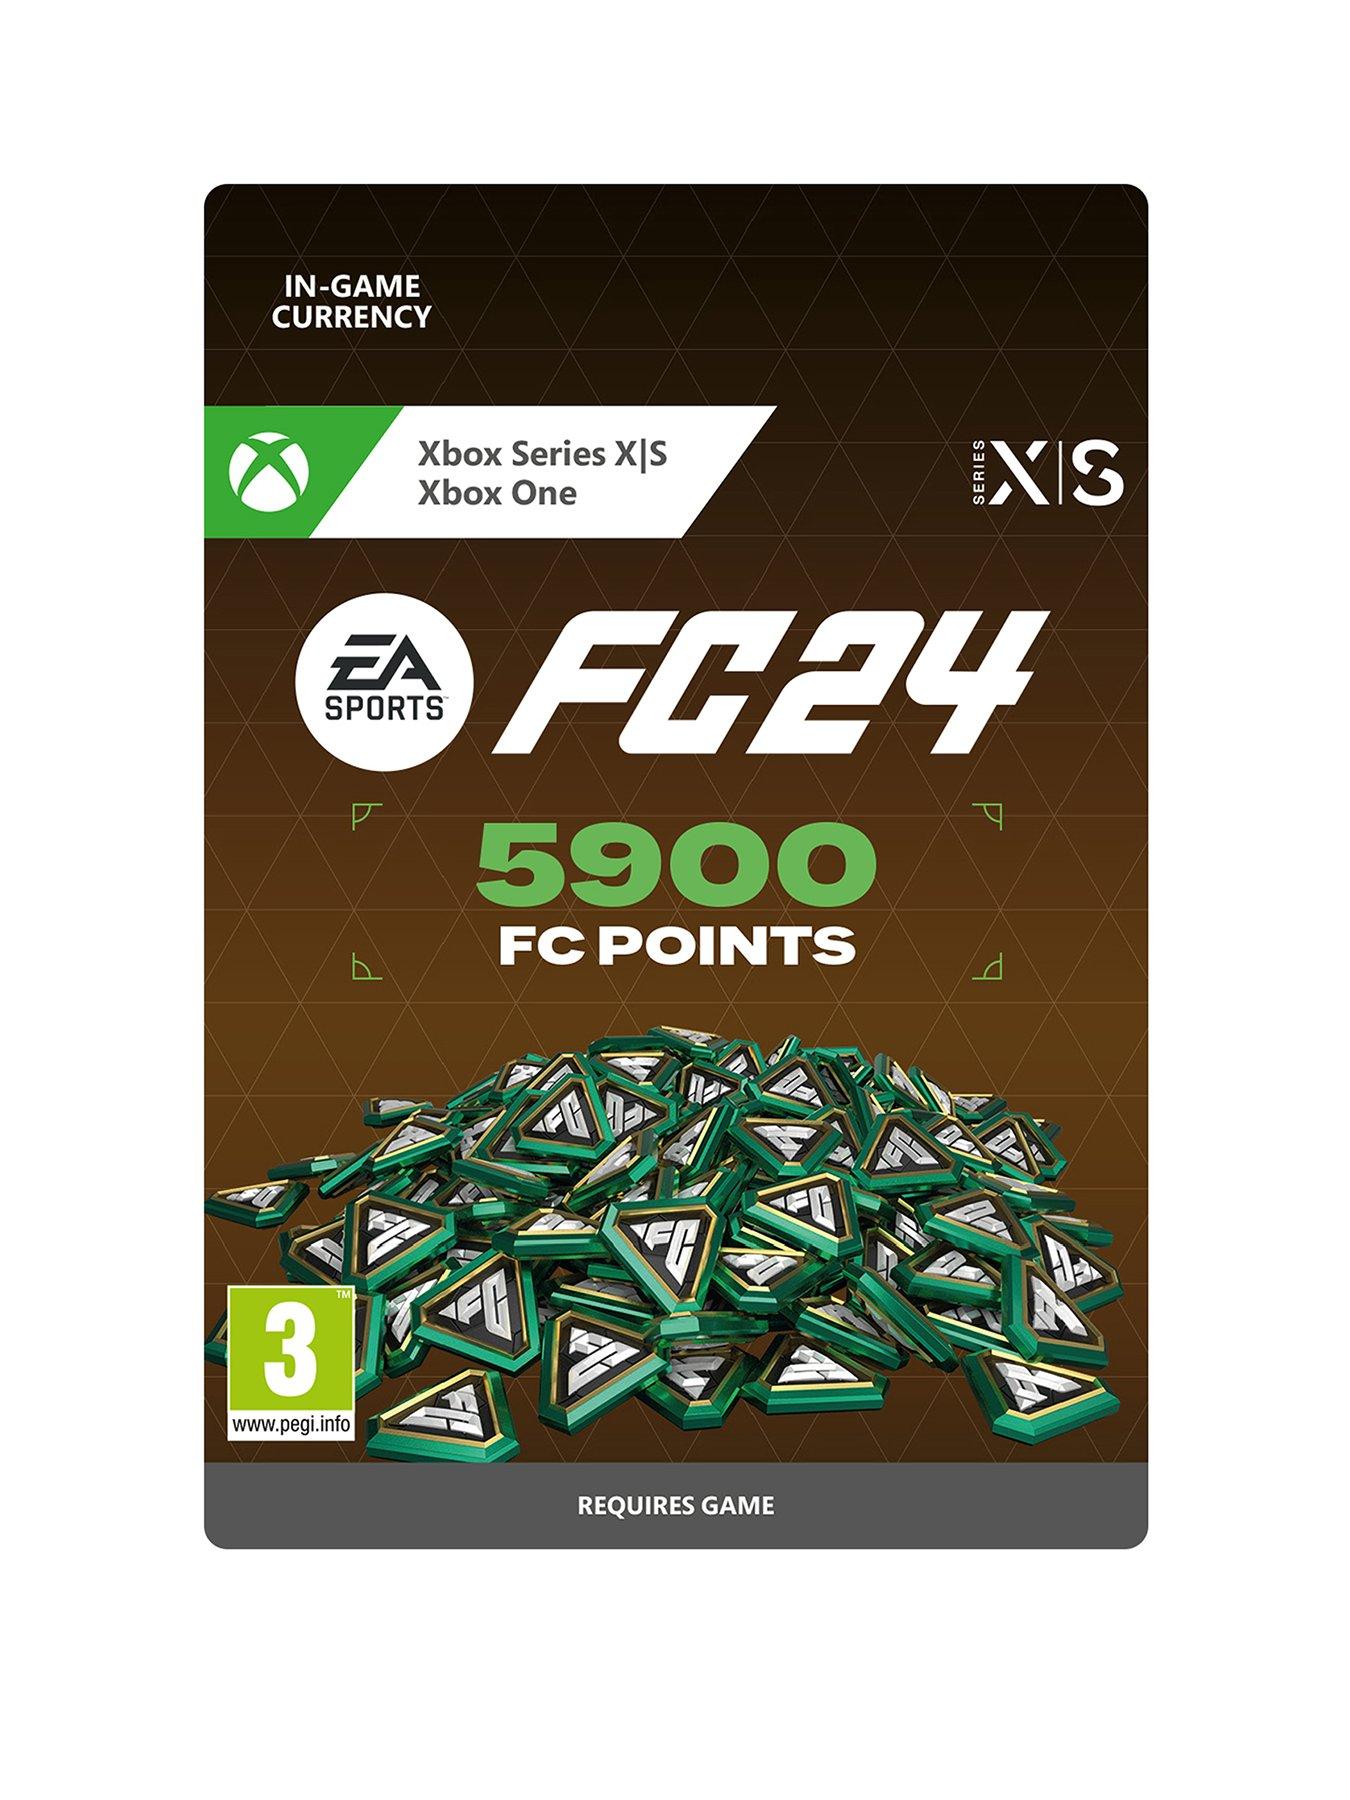 Forza Horizon 5 runs just fine on Xbox One, in case anyone still cares. :  r/xboxone